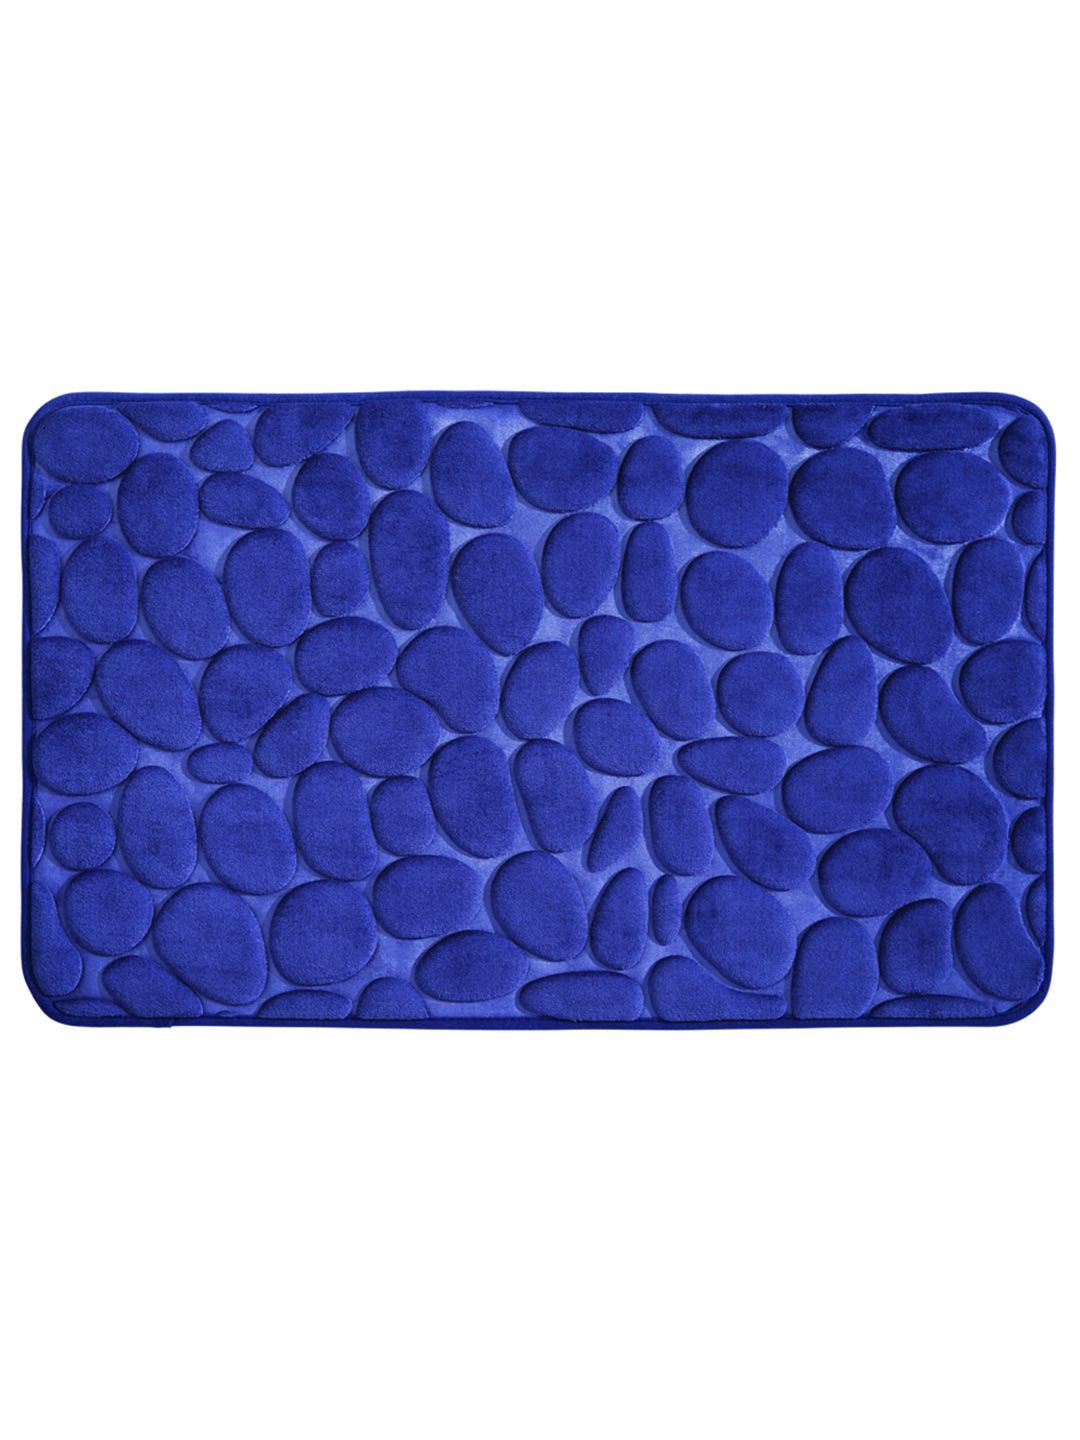 INTERDESIGN Navy Blue Memory Foam Polyester Non-Slip Bath Mat Price in India